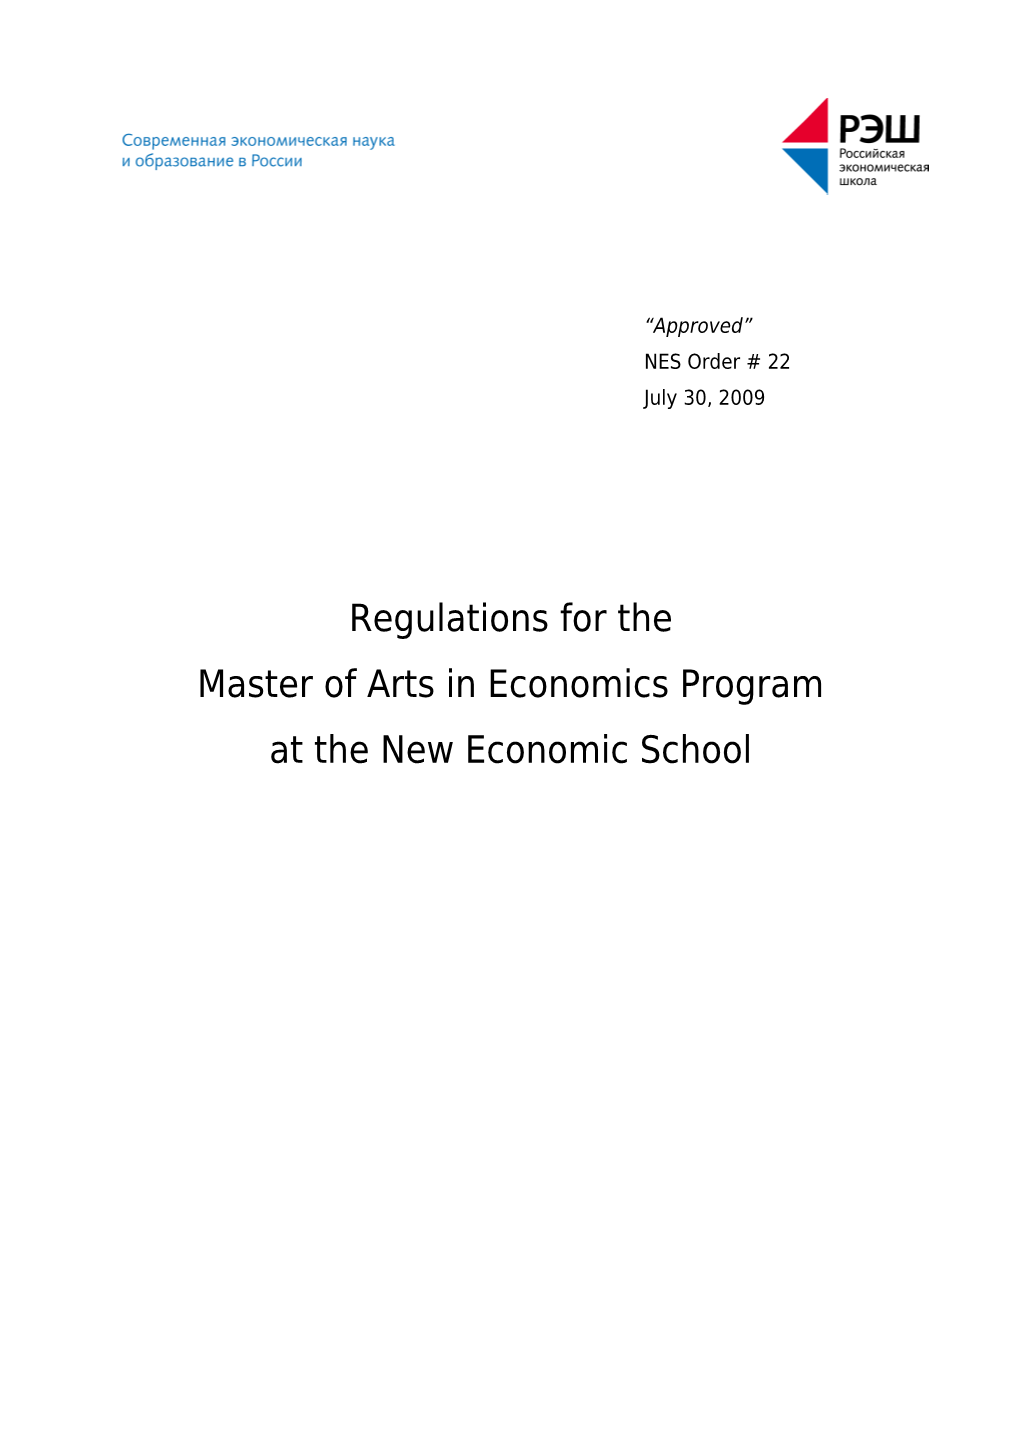 Regulations for the Master of Arts in Economics Program